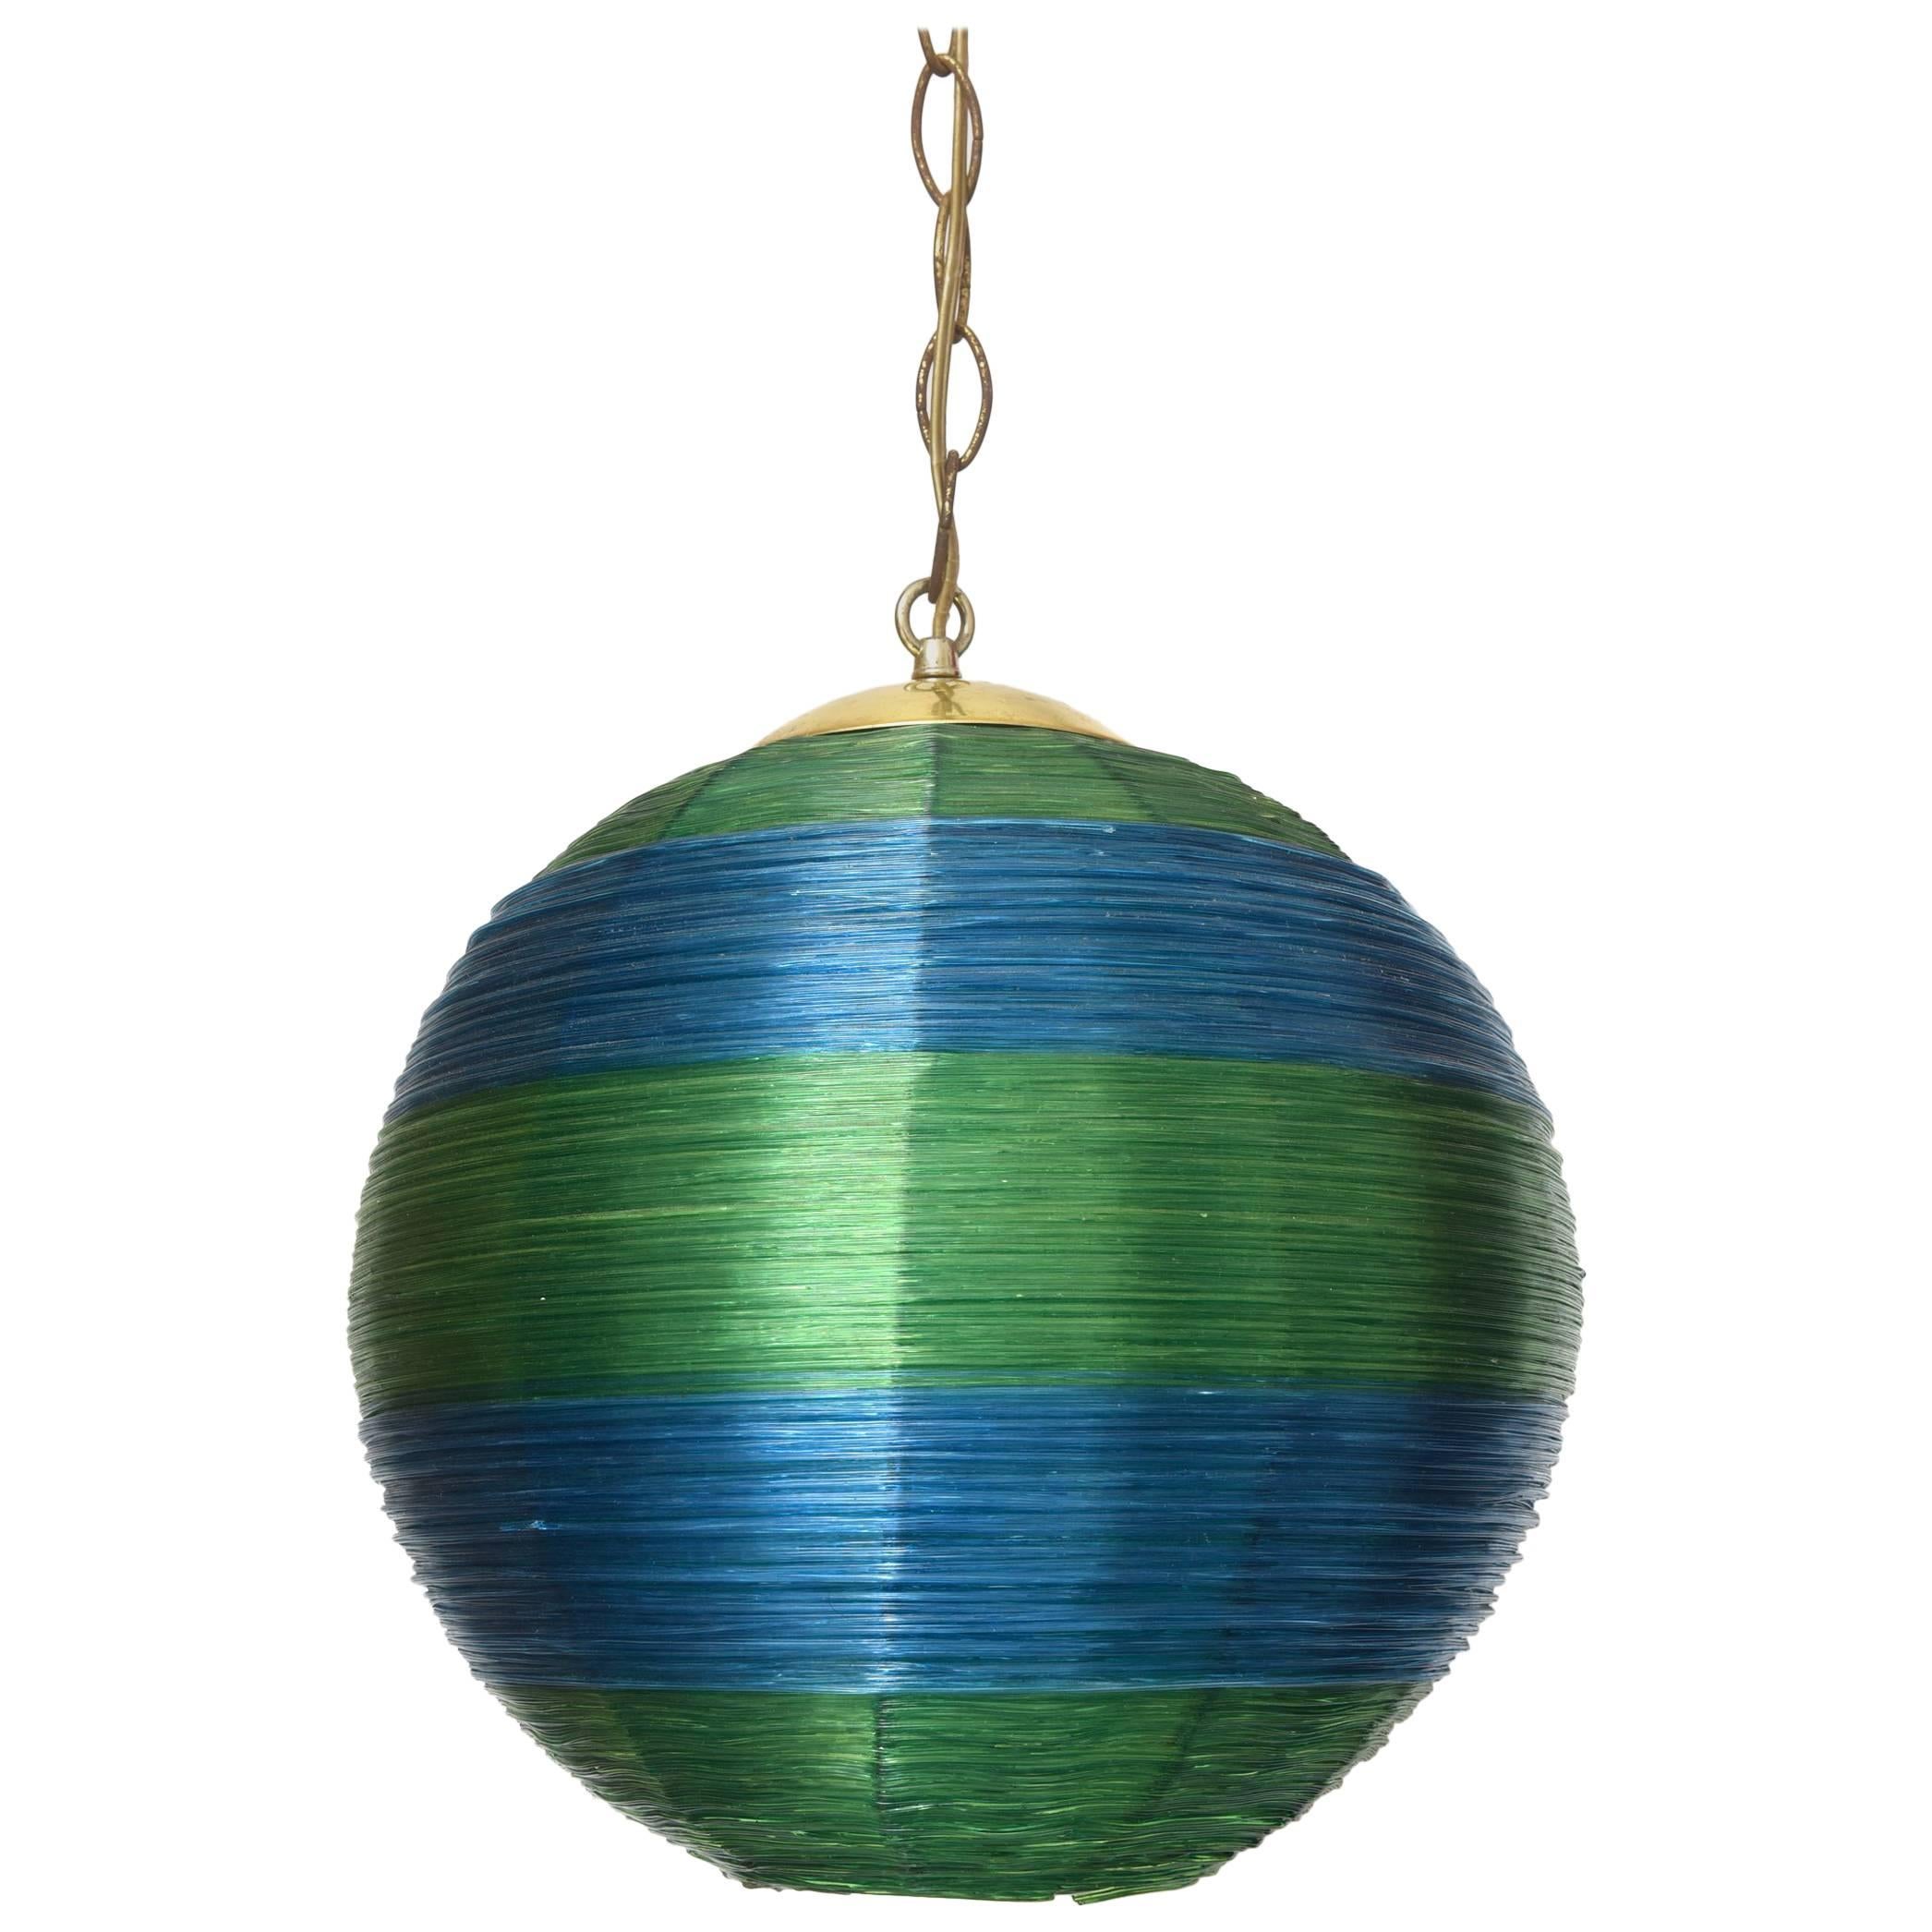 Midcentury Fiberglass Green and Blue Hanging Ball Lamp